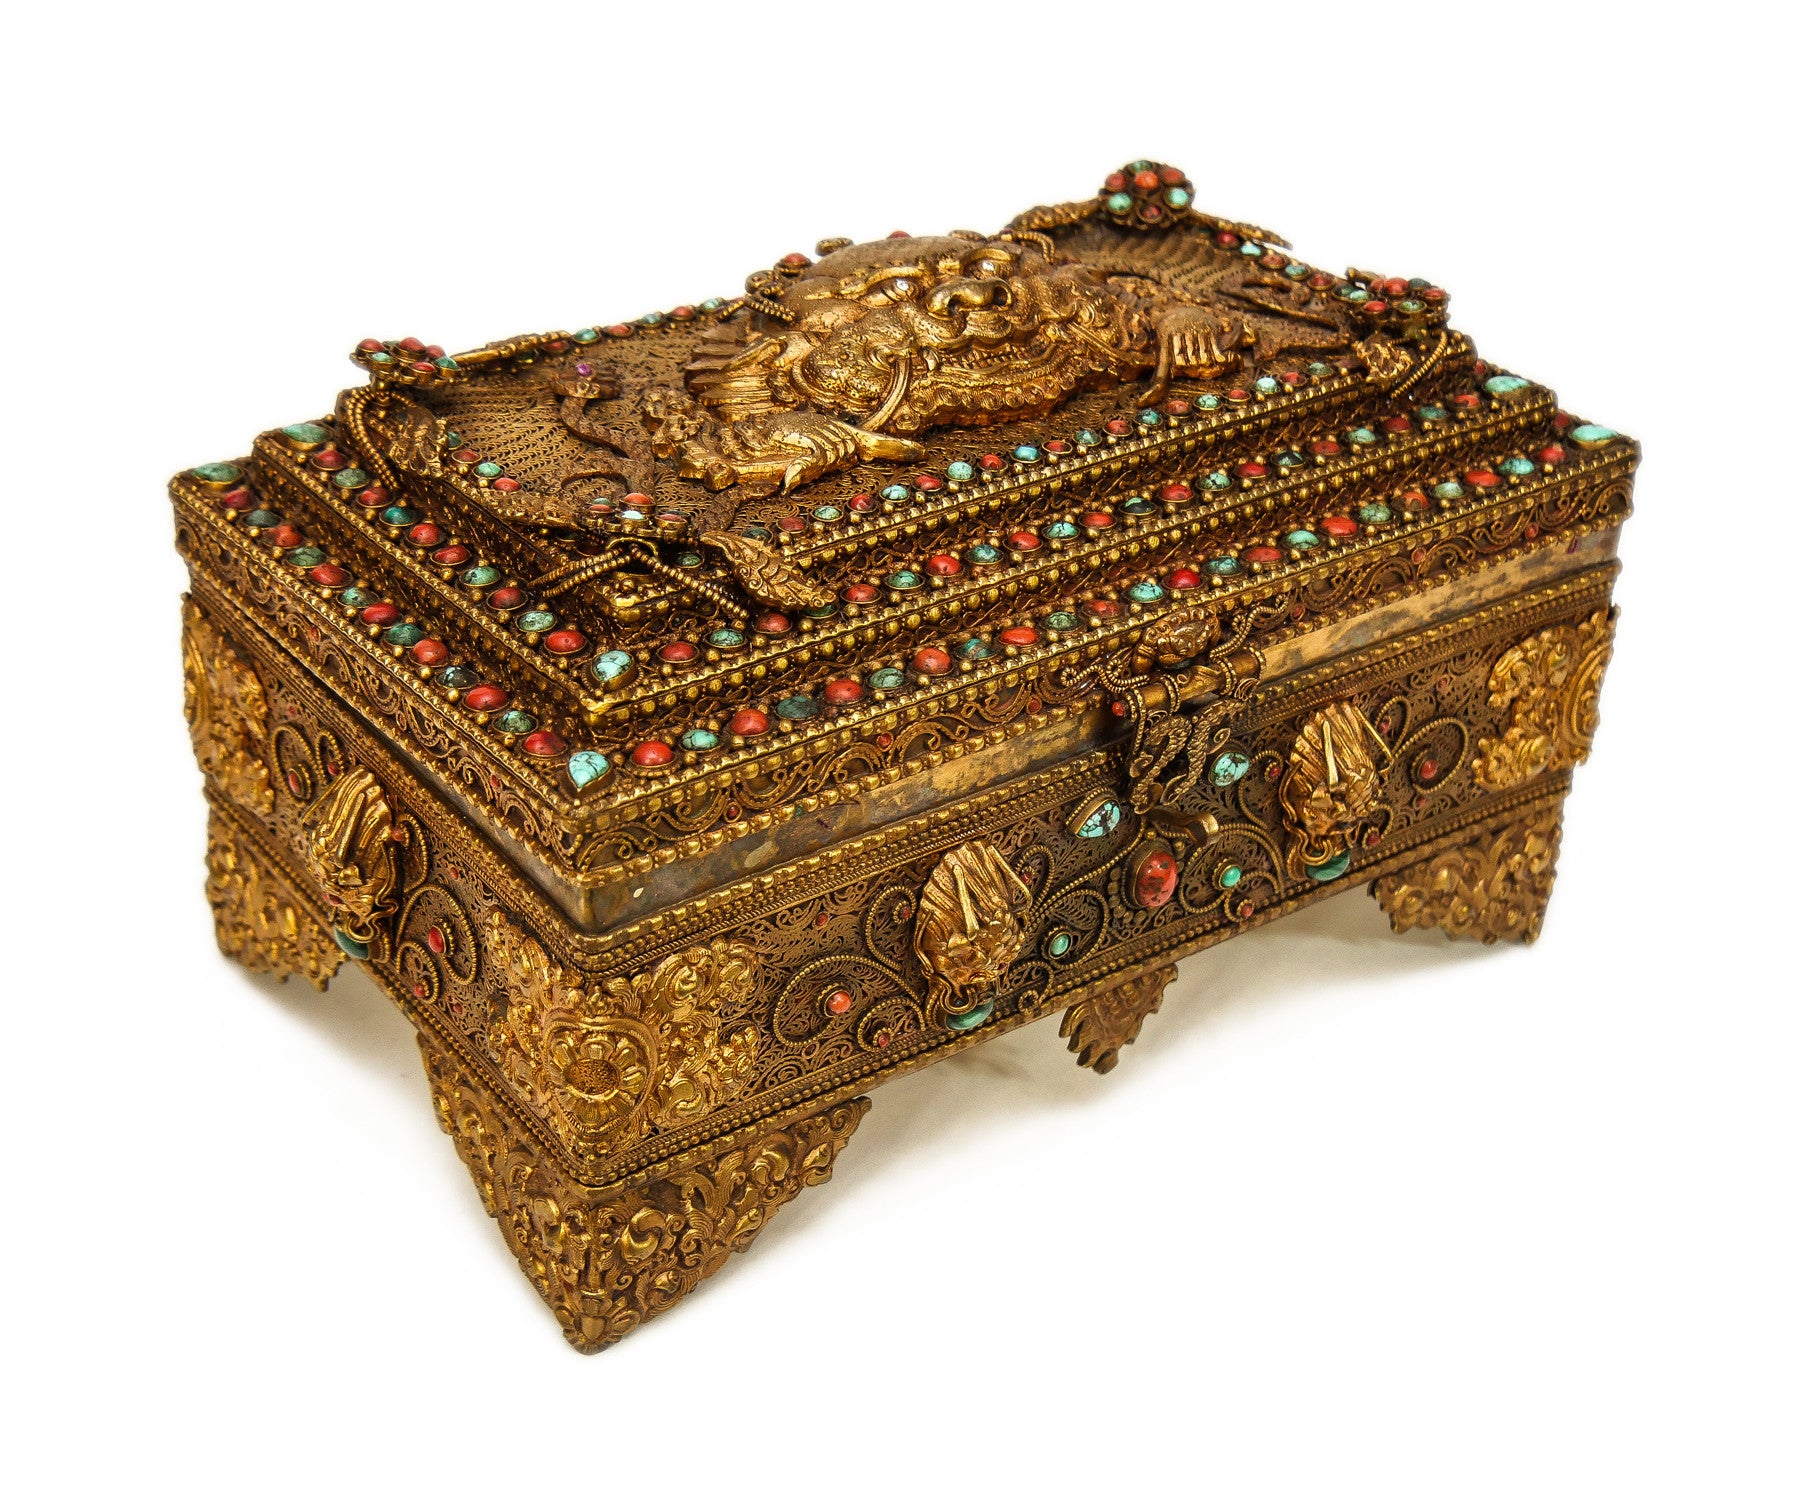 Garuda charm box - Tibet Arts & Healing